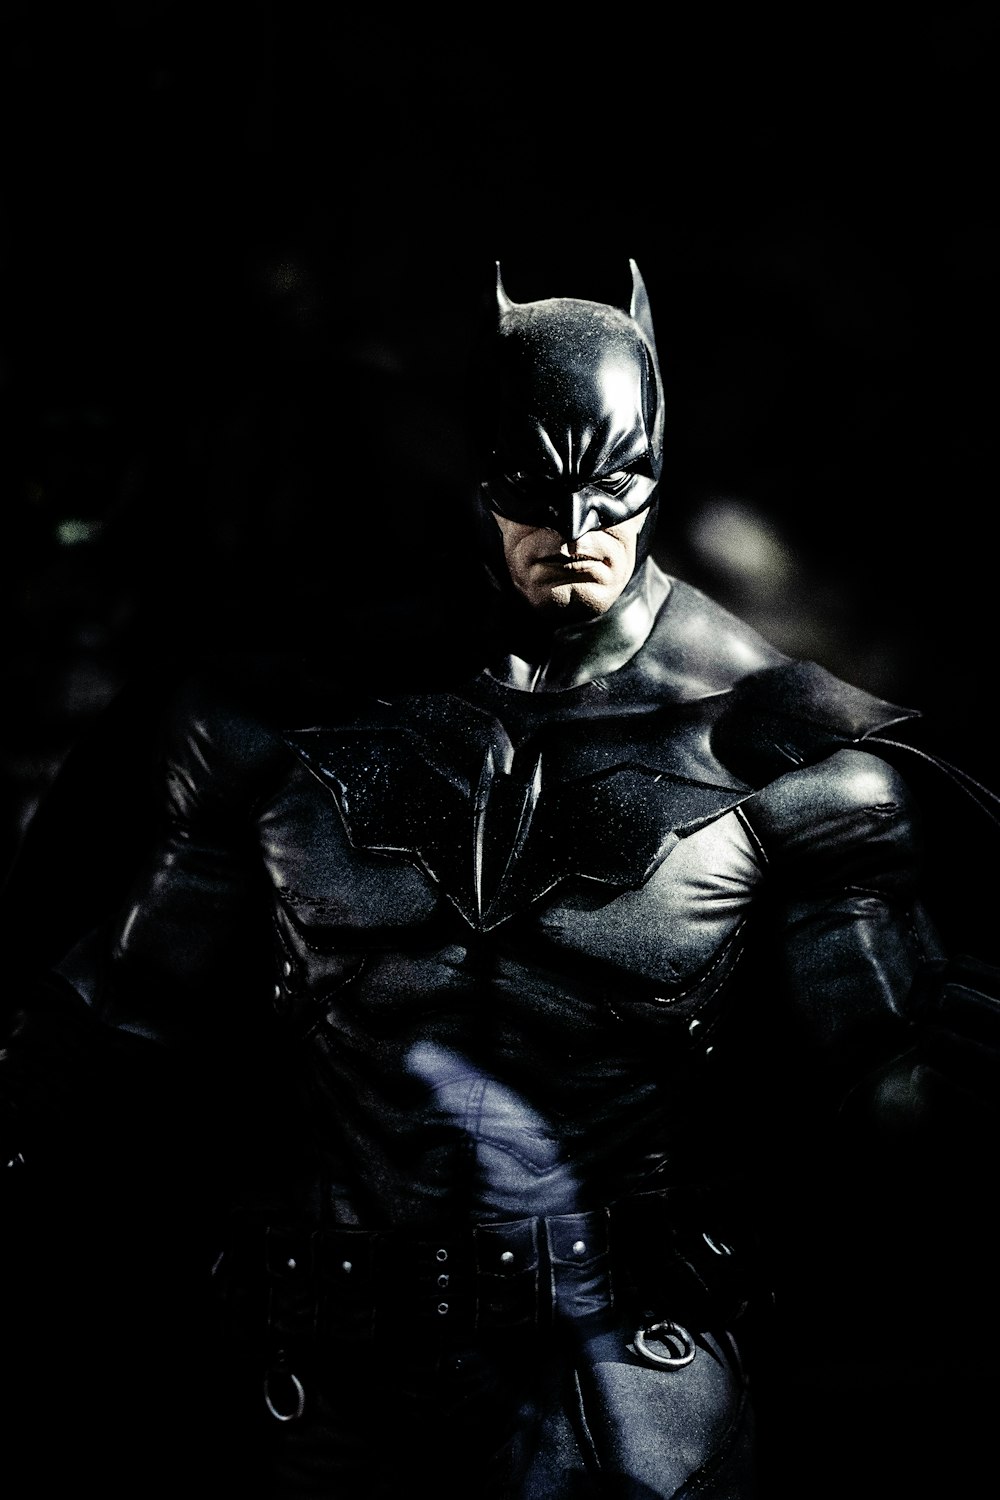 750+ Batman Pictures [HQ] | Download Free Images on Unsplash
